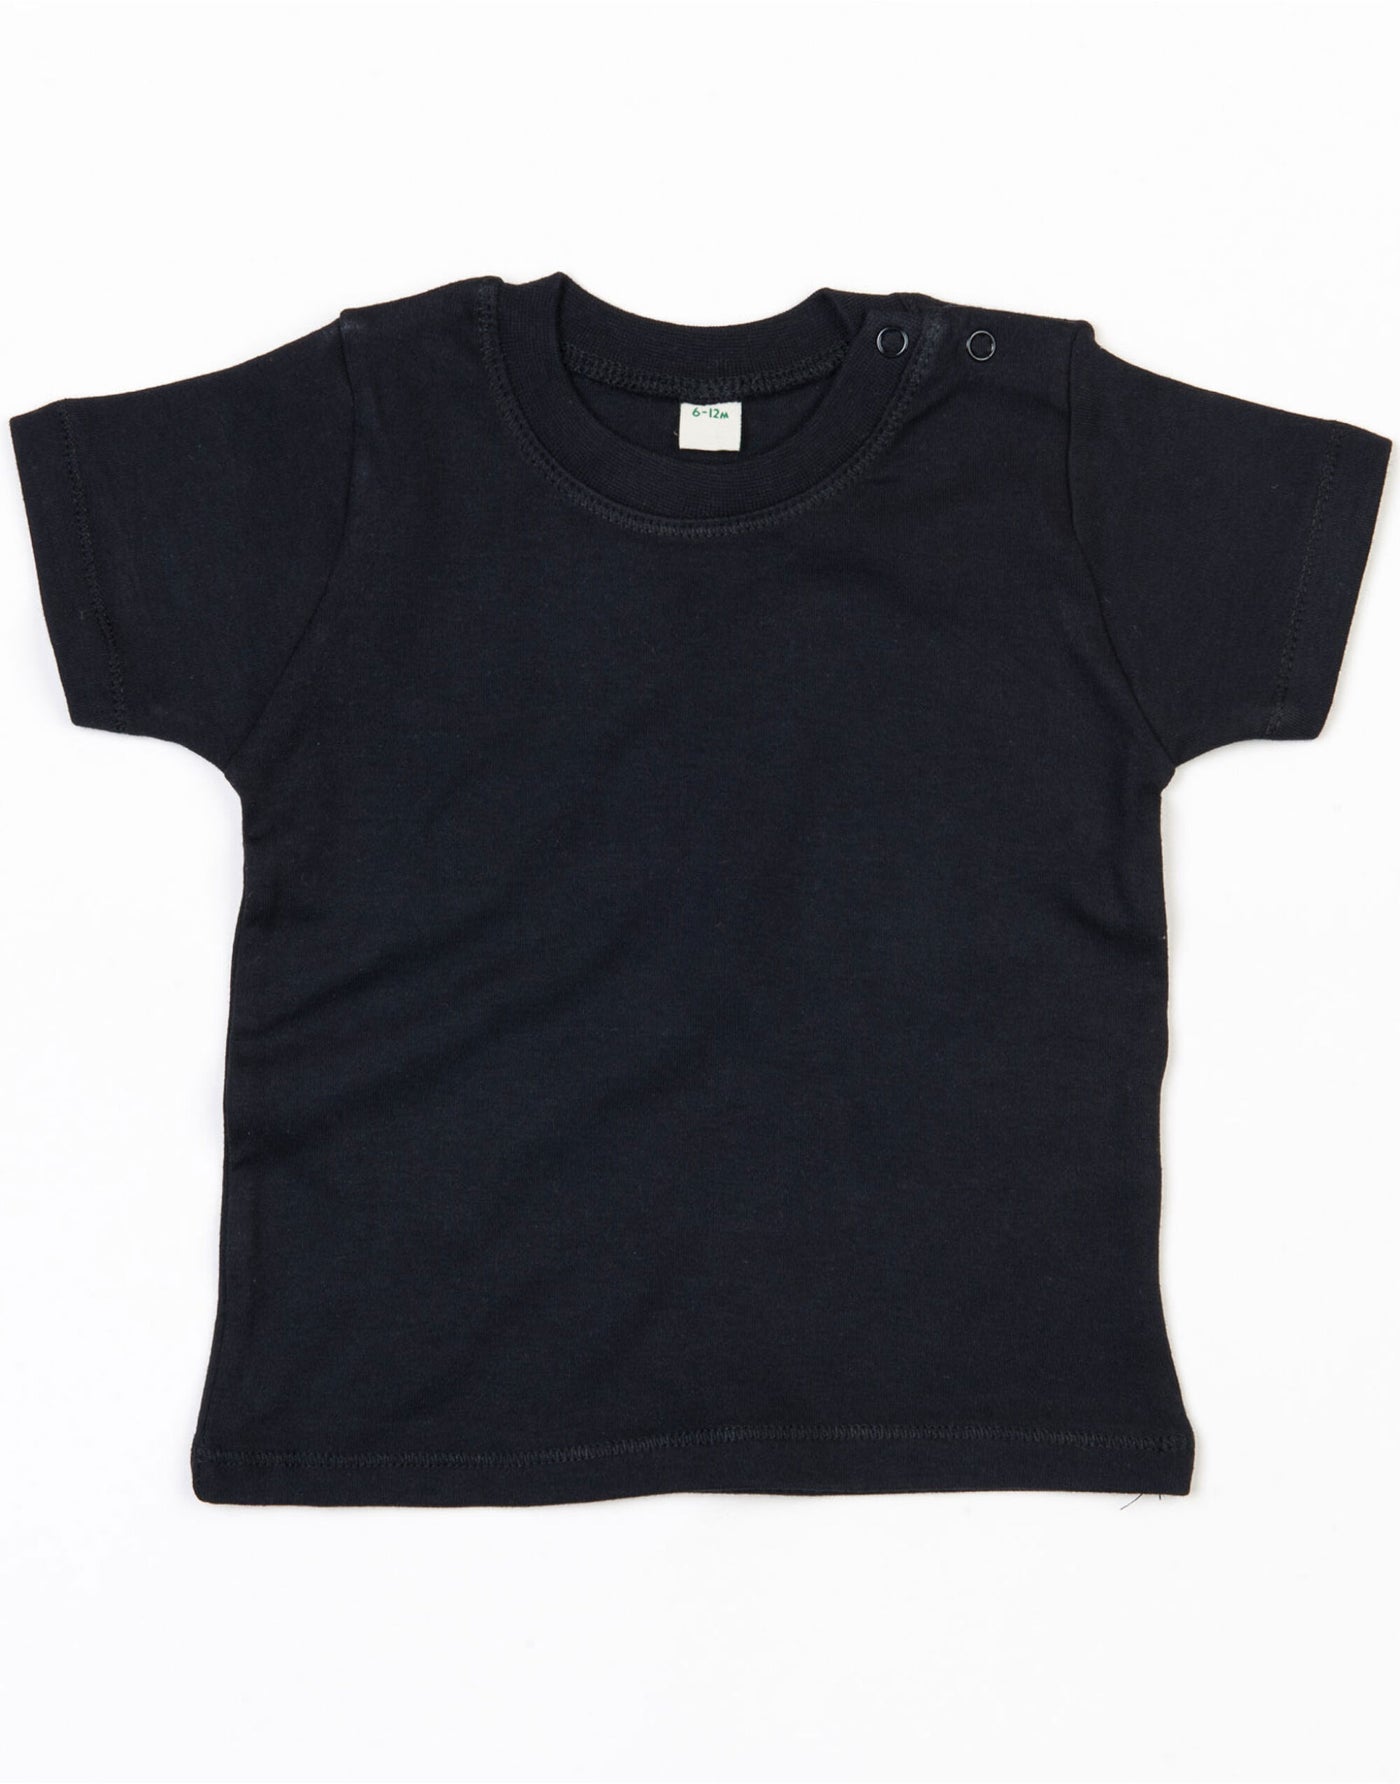 Baby Black T-Shirt